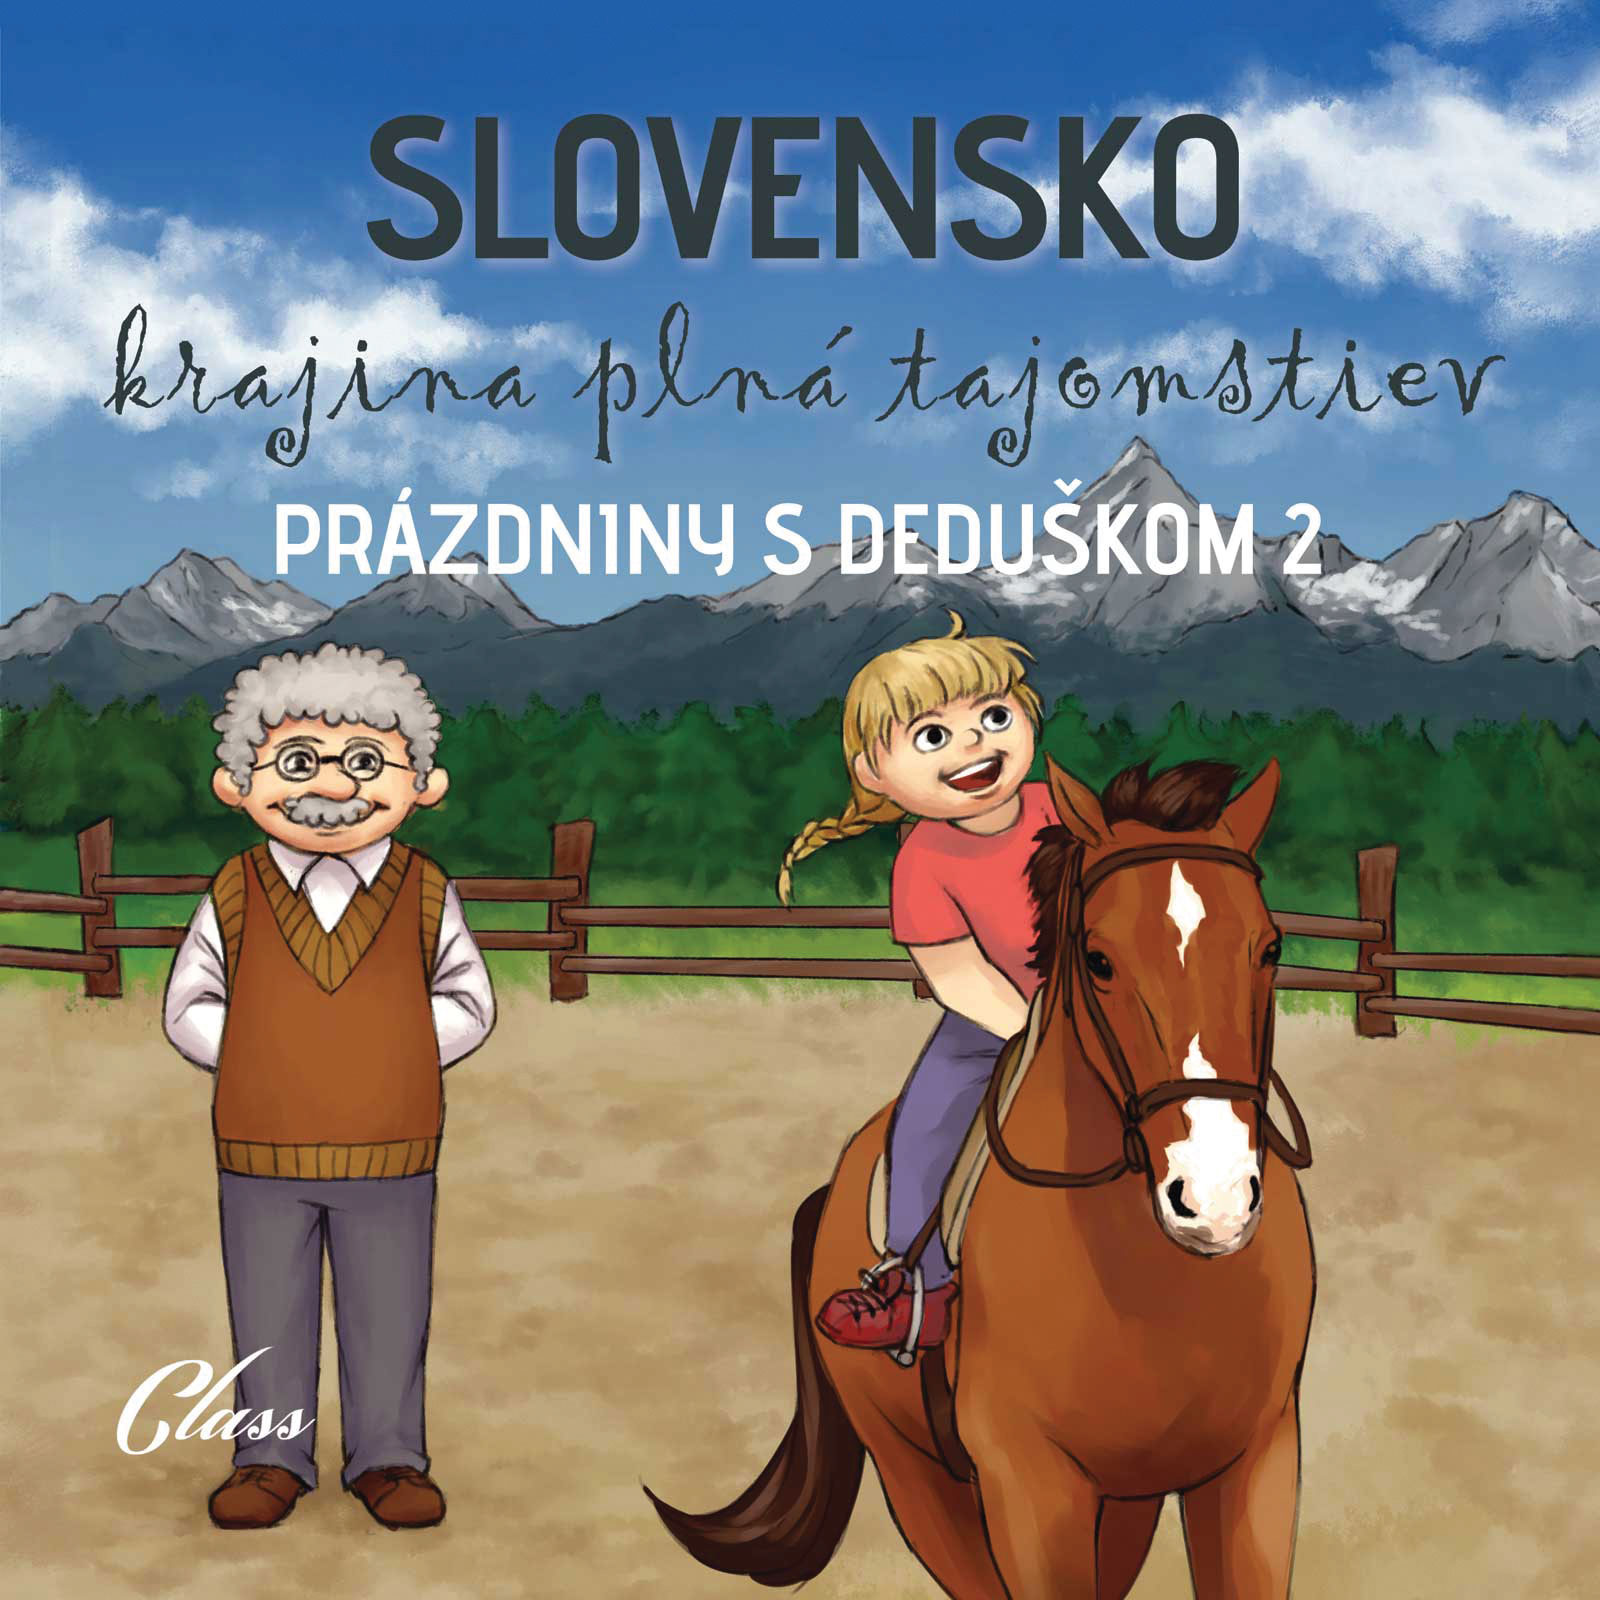 Slovensko - krajina plna tajomstiev, Prazdniny s deduskom 2